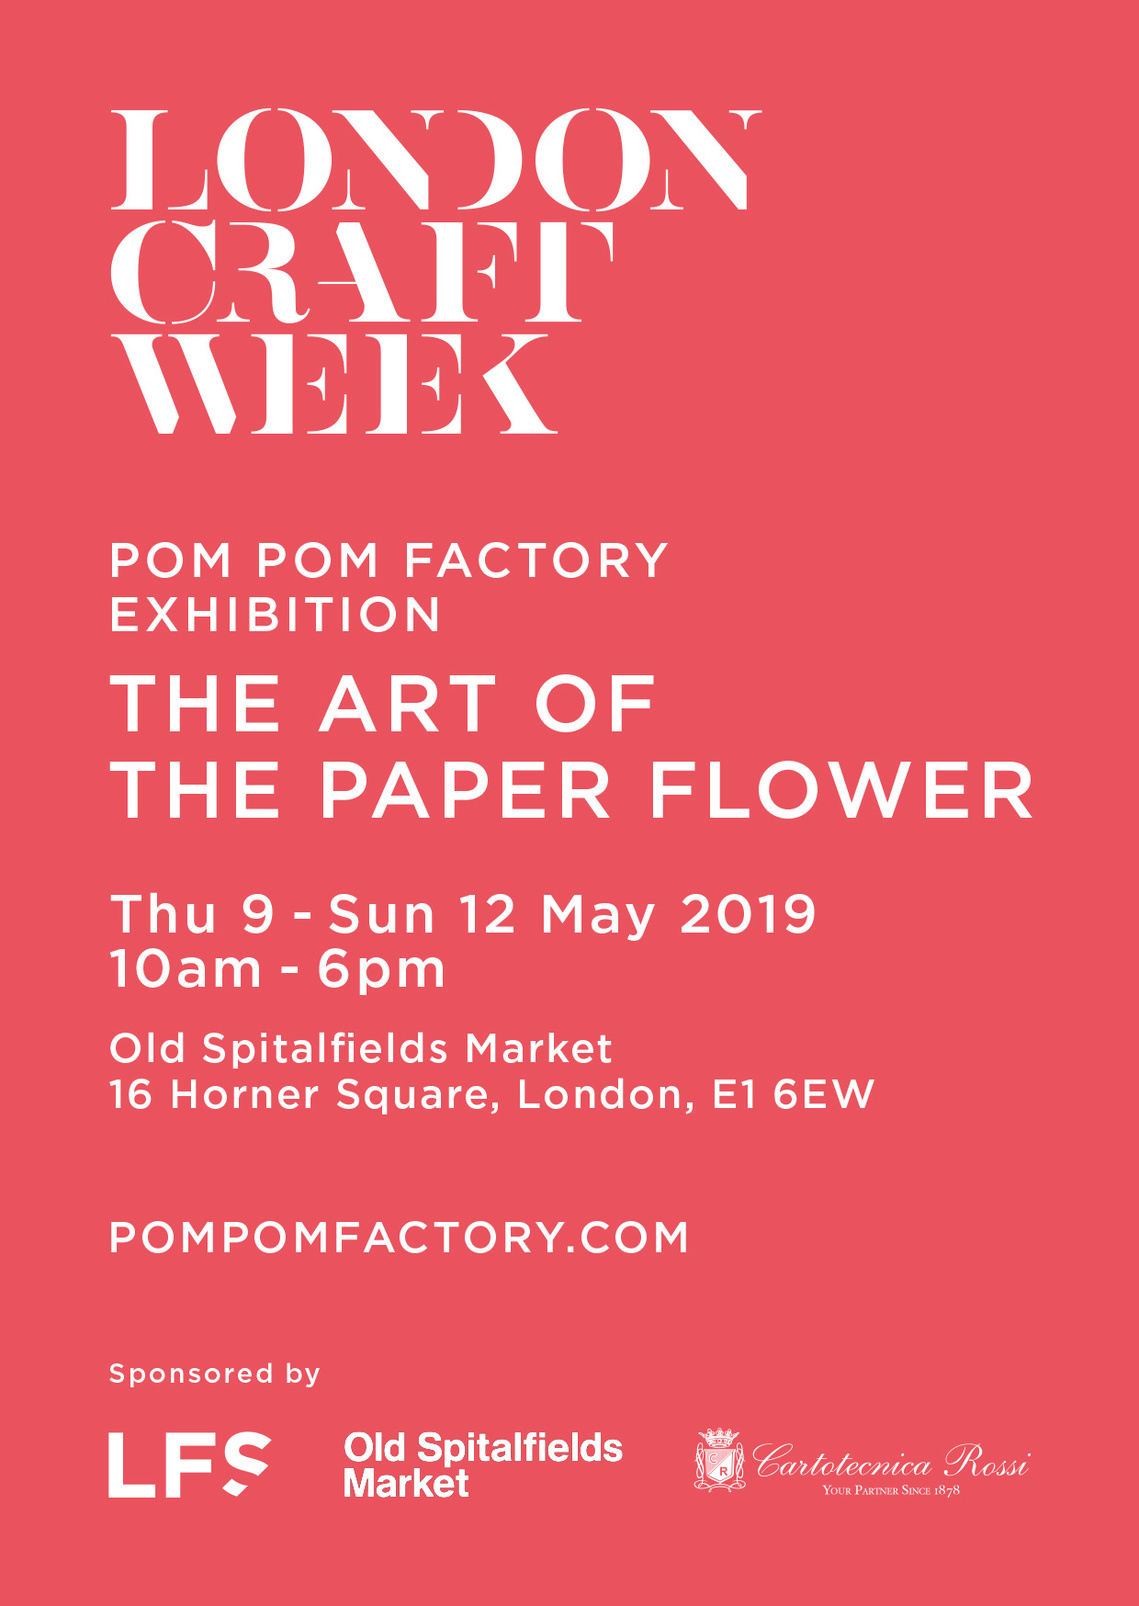 London Craft Week Pom Pom Factory Invitation